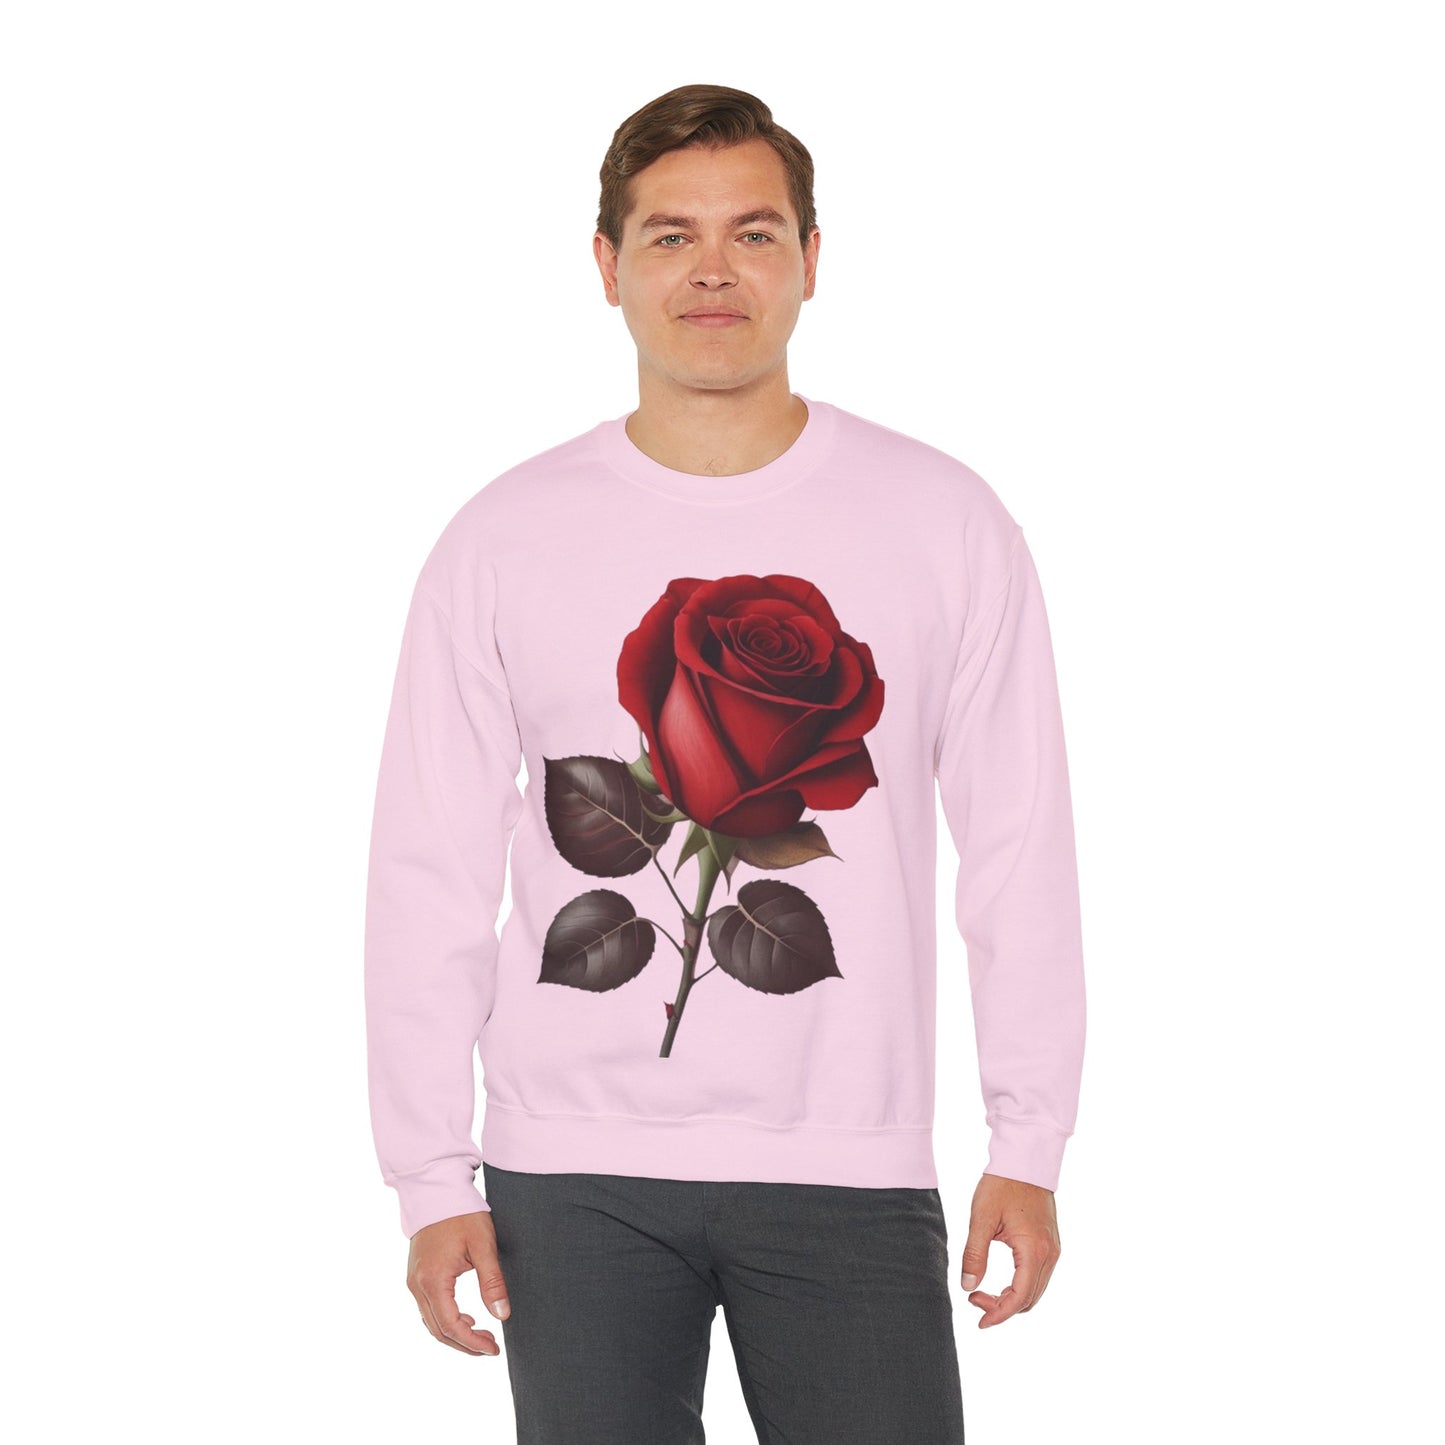 Red Rose - Unisex Crewneck Sweatshirt